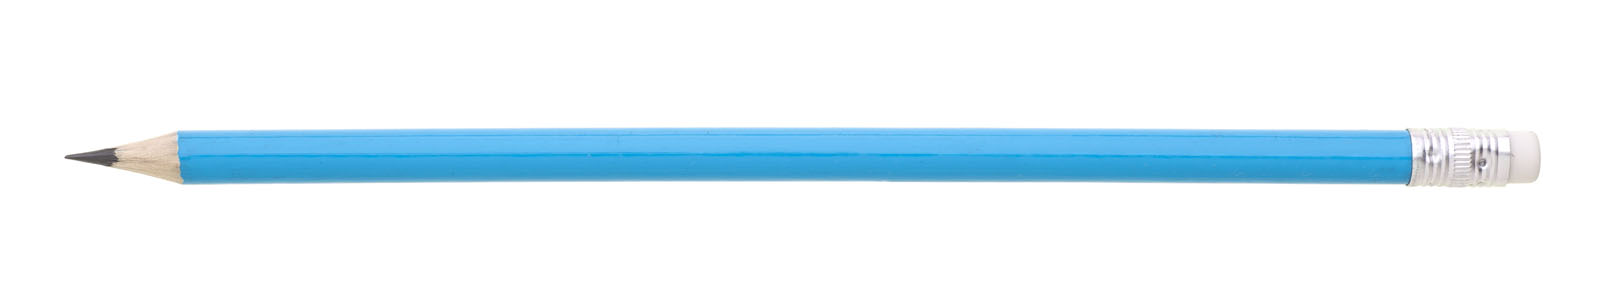 Tužka s gumou hrocená LUNGO, modrá světlá